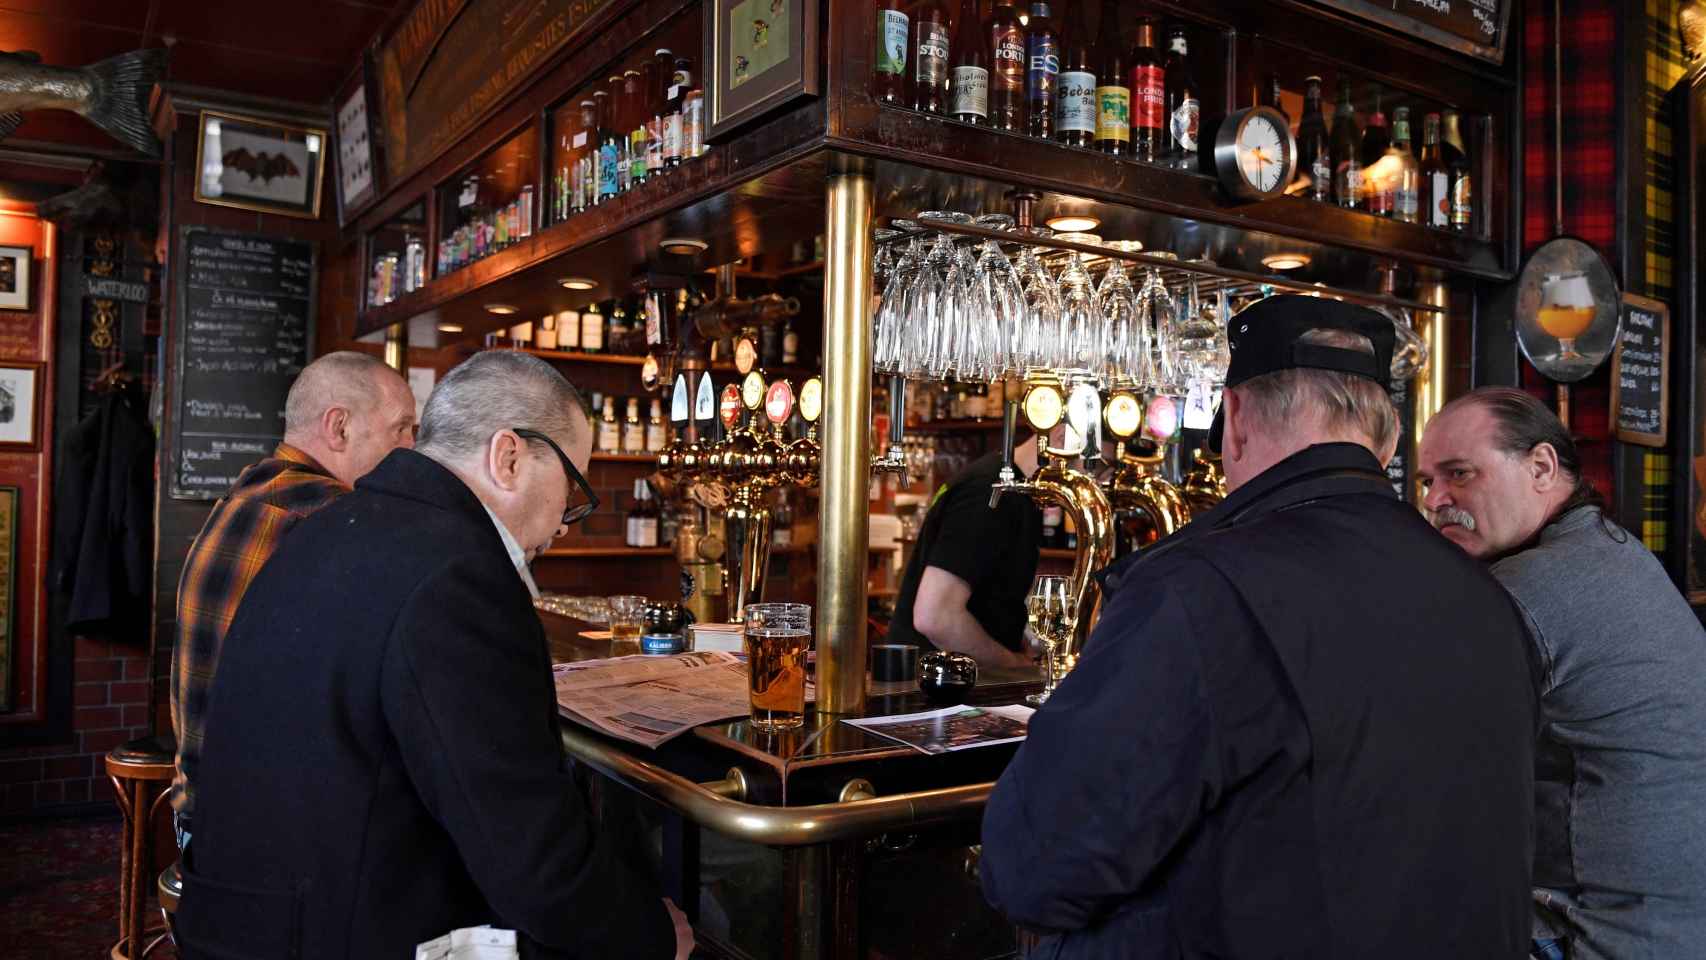 Un bar sueco, abierto estos días pese a la pandemia de coronavirus.